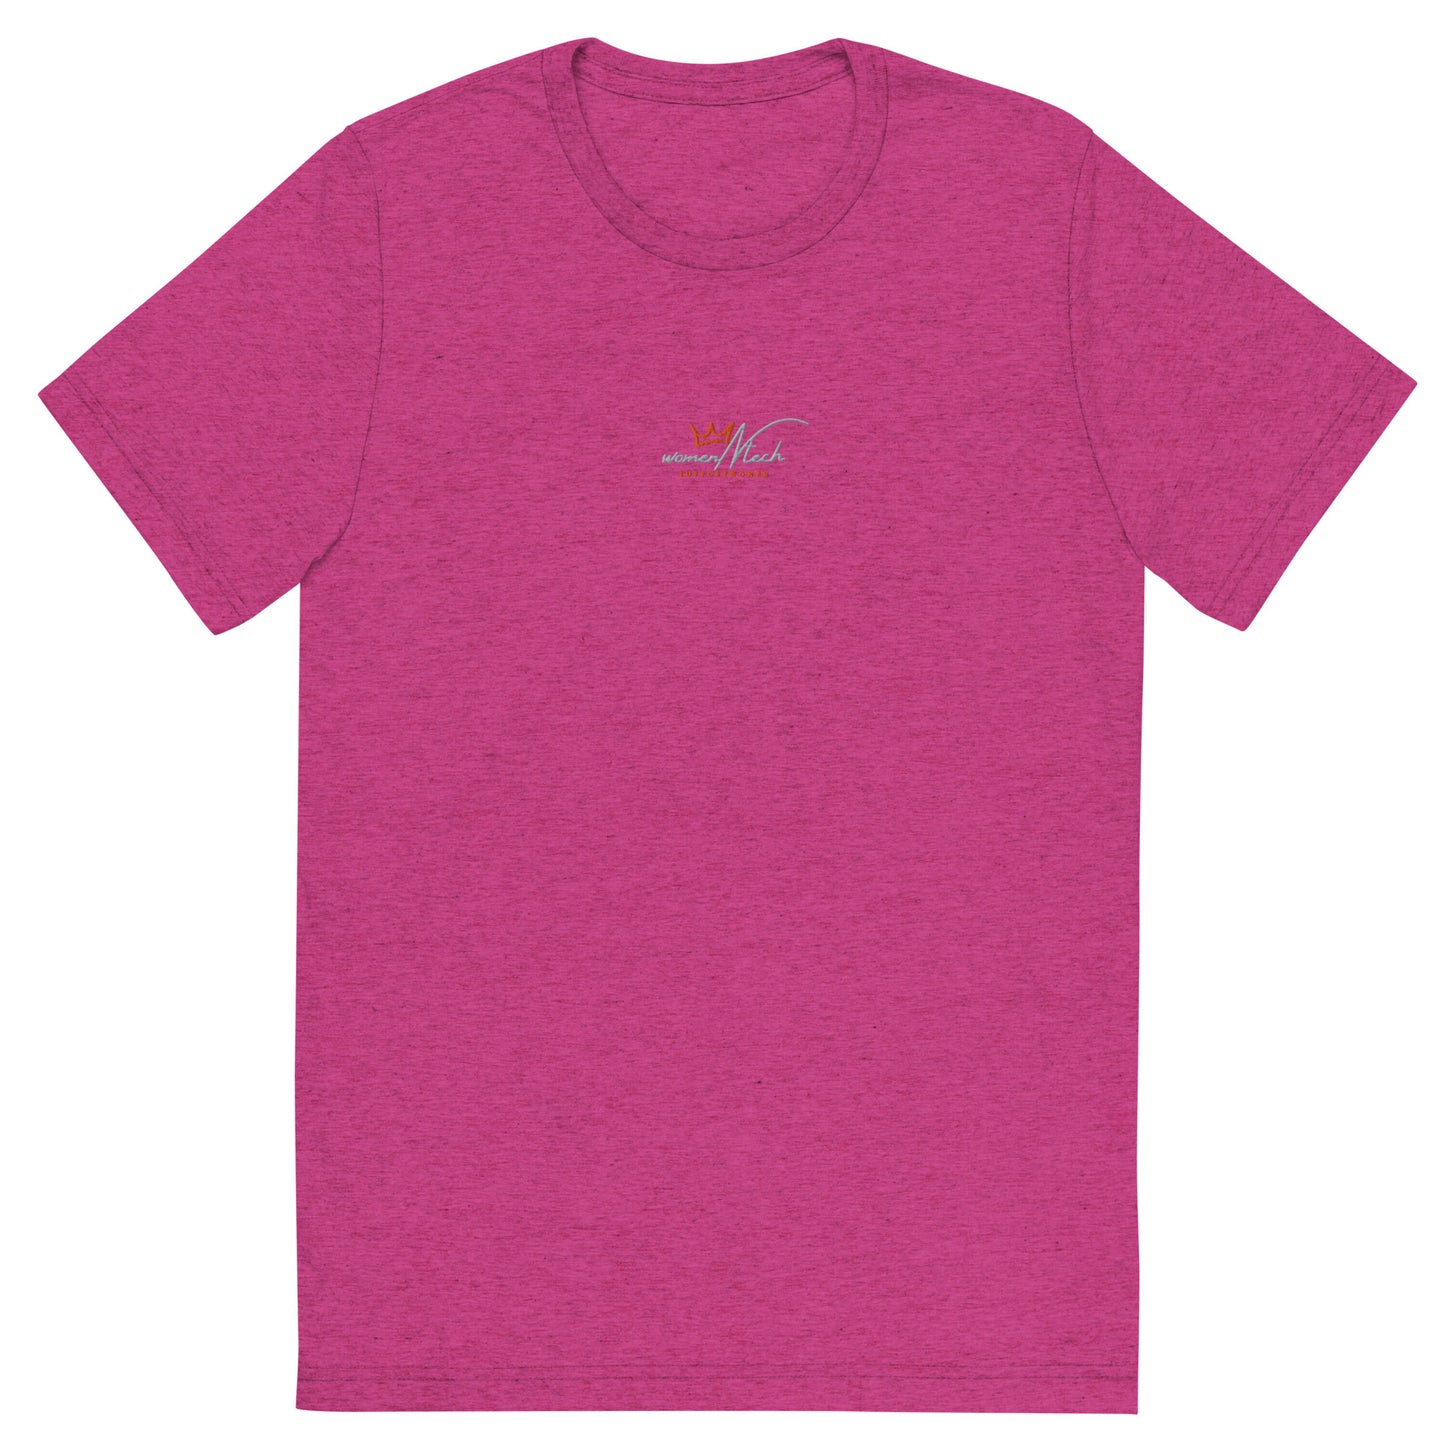 Short Sleeve t-shirt For Sale - Buy Premium Short Sleeve t-shirt